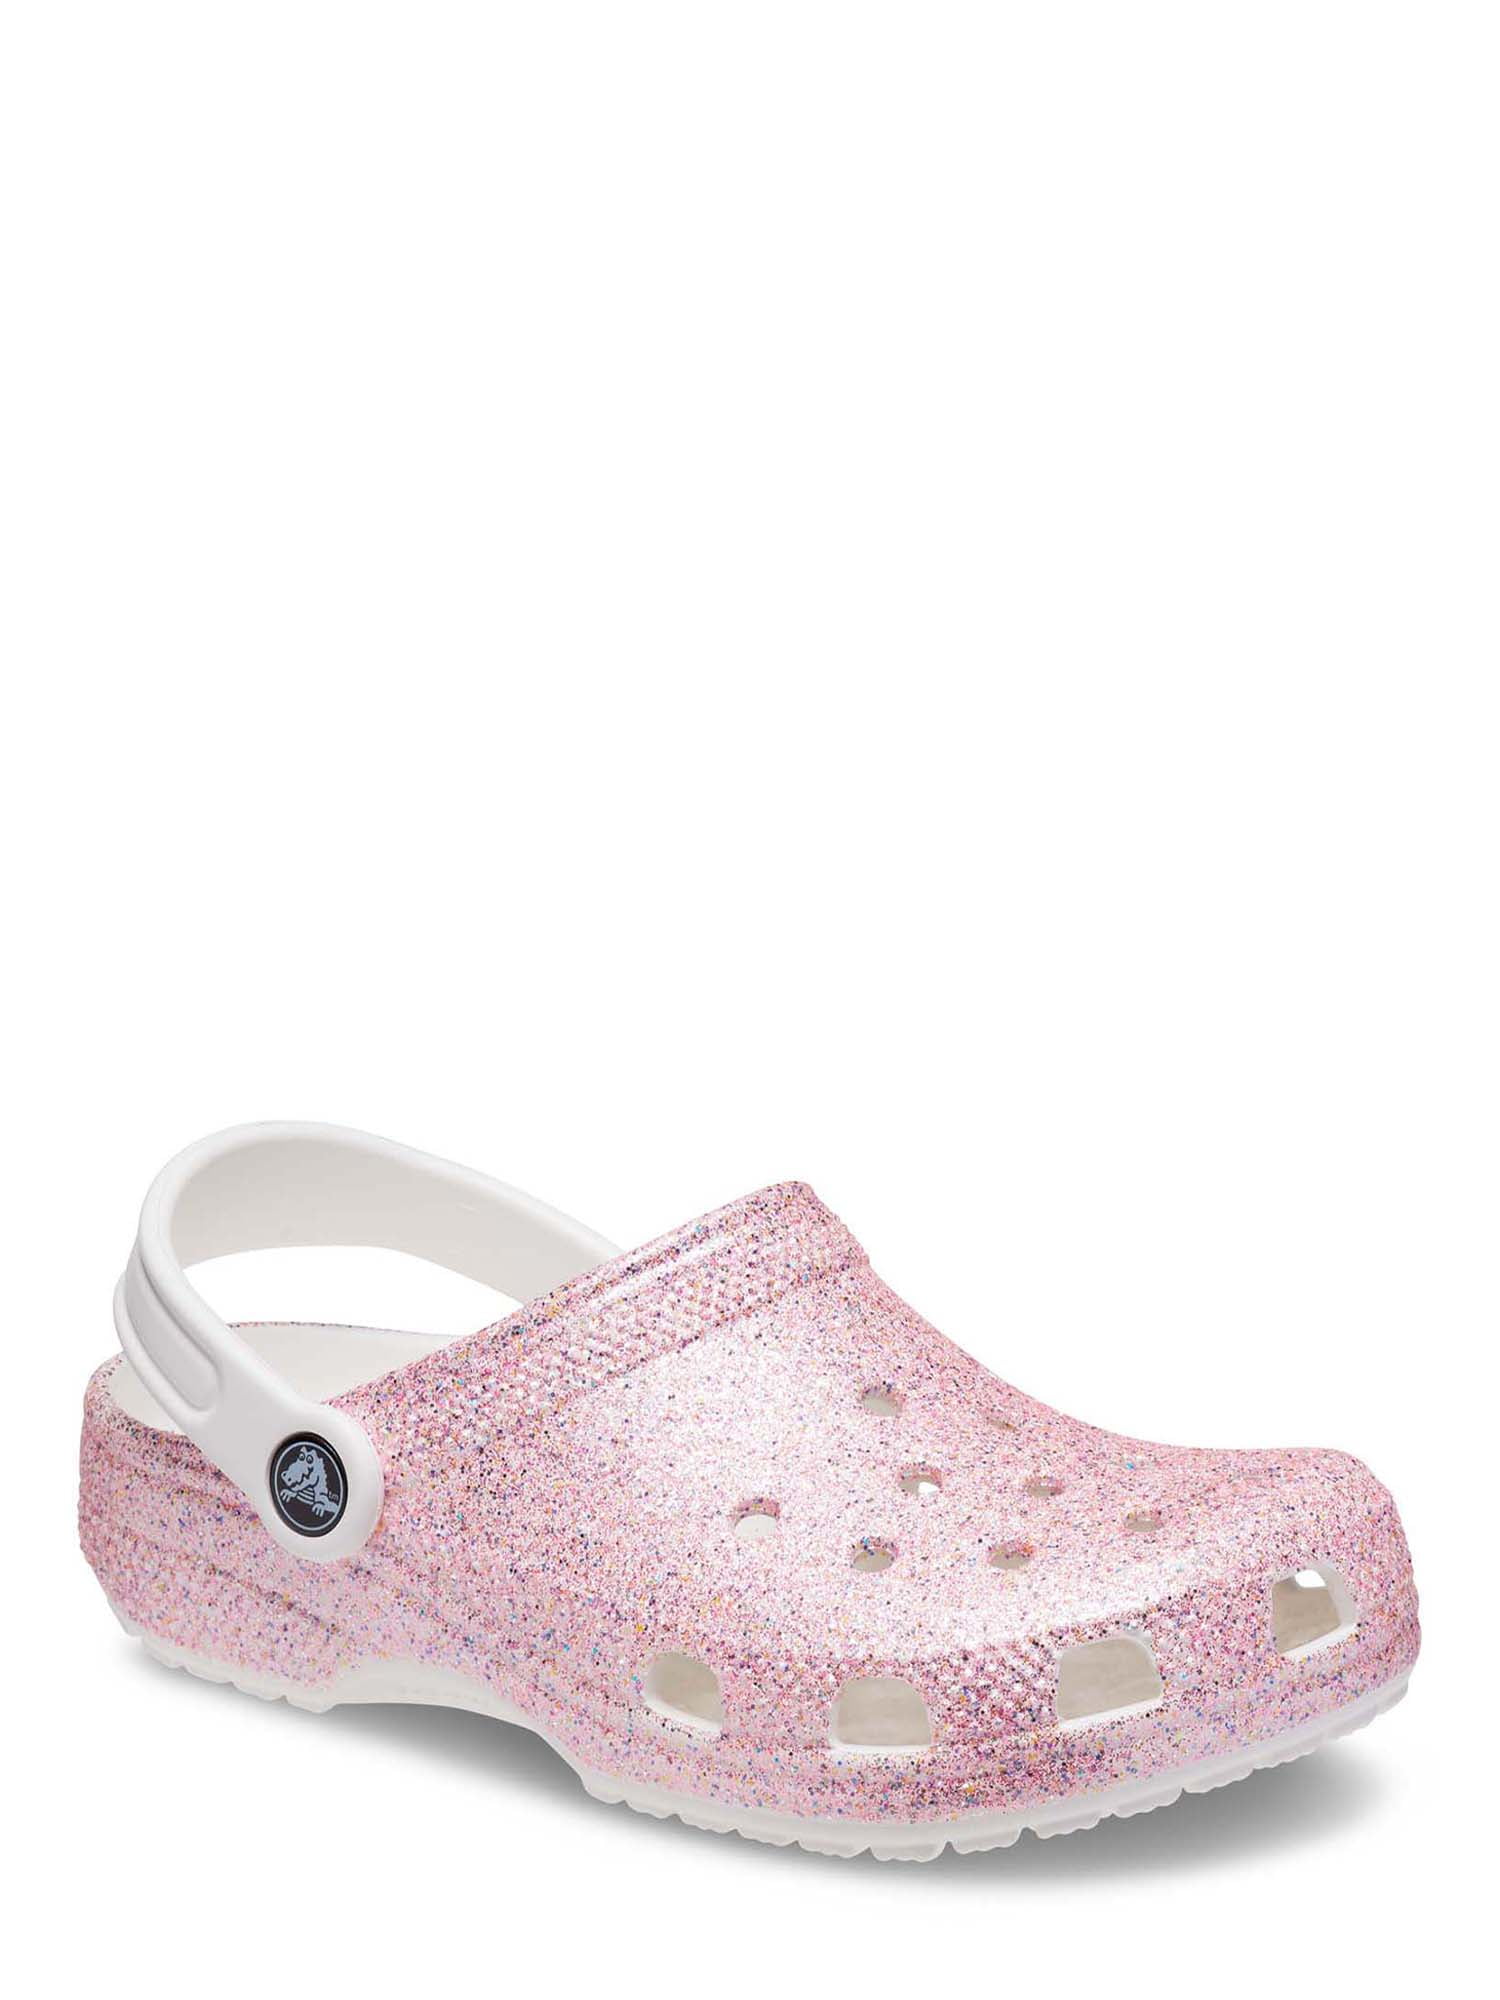 Crocs Toddler & Kids Classic Glitter Sandal, Sizes 4-6 -